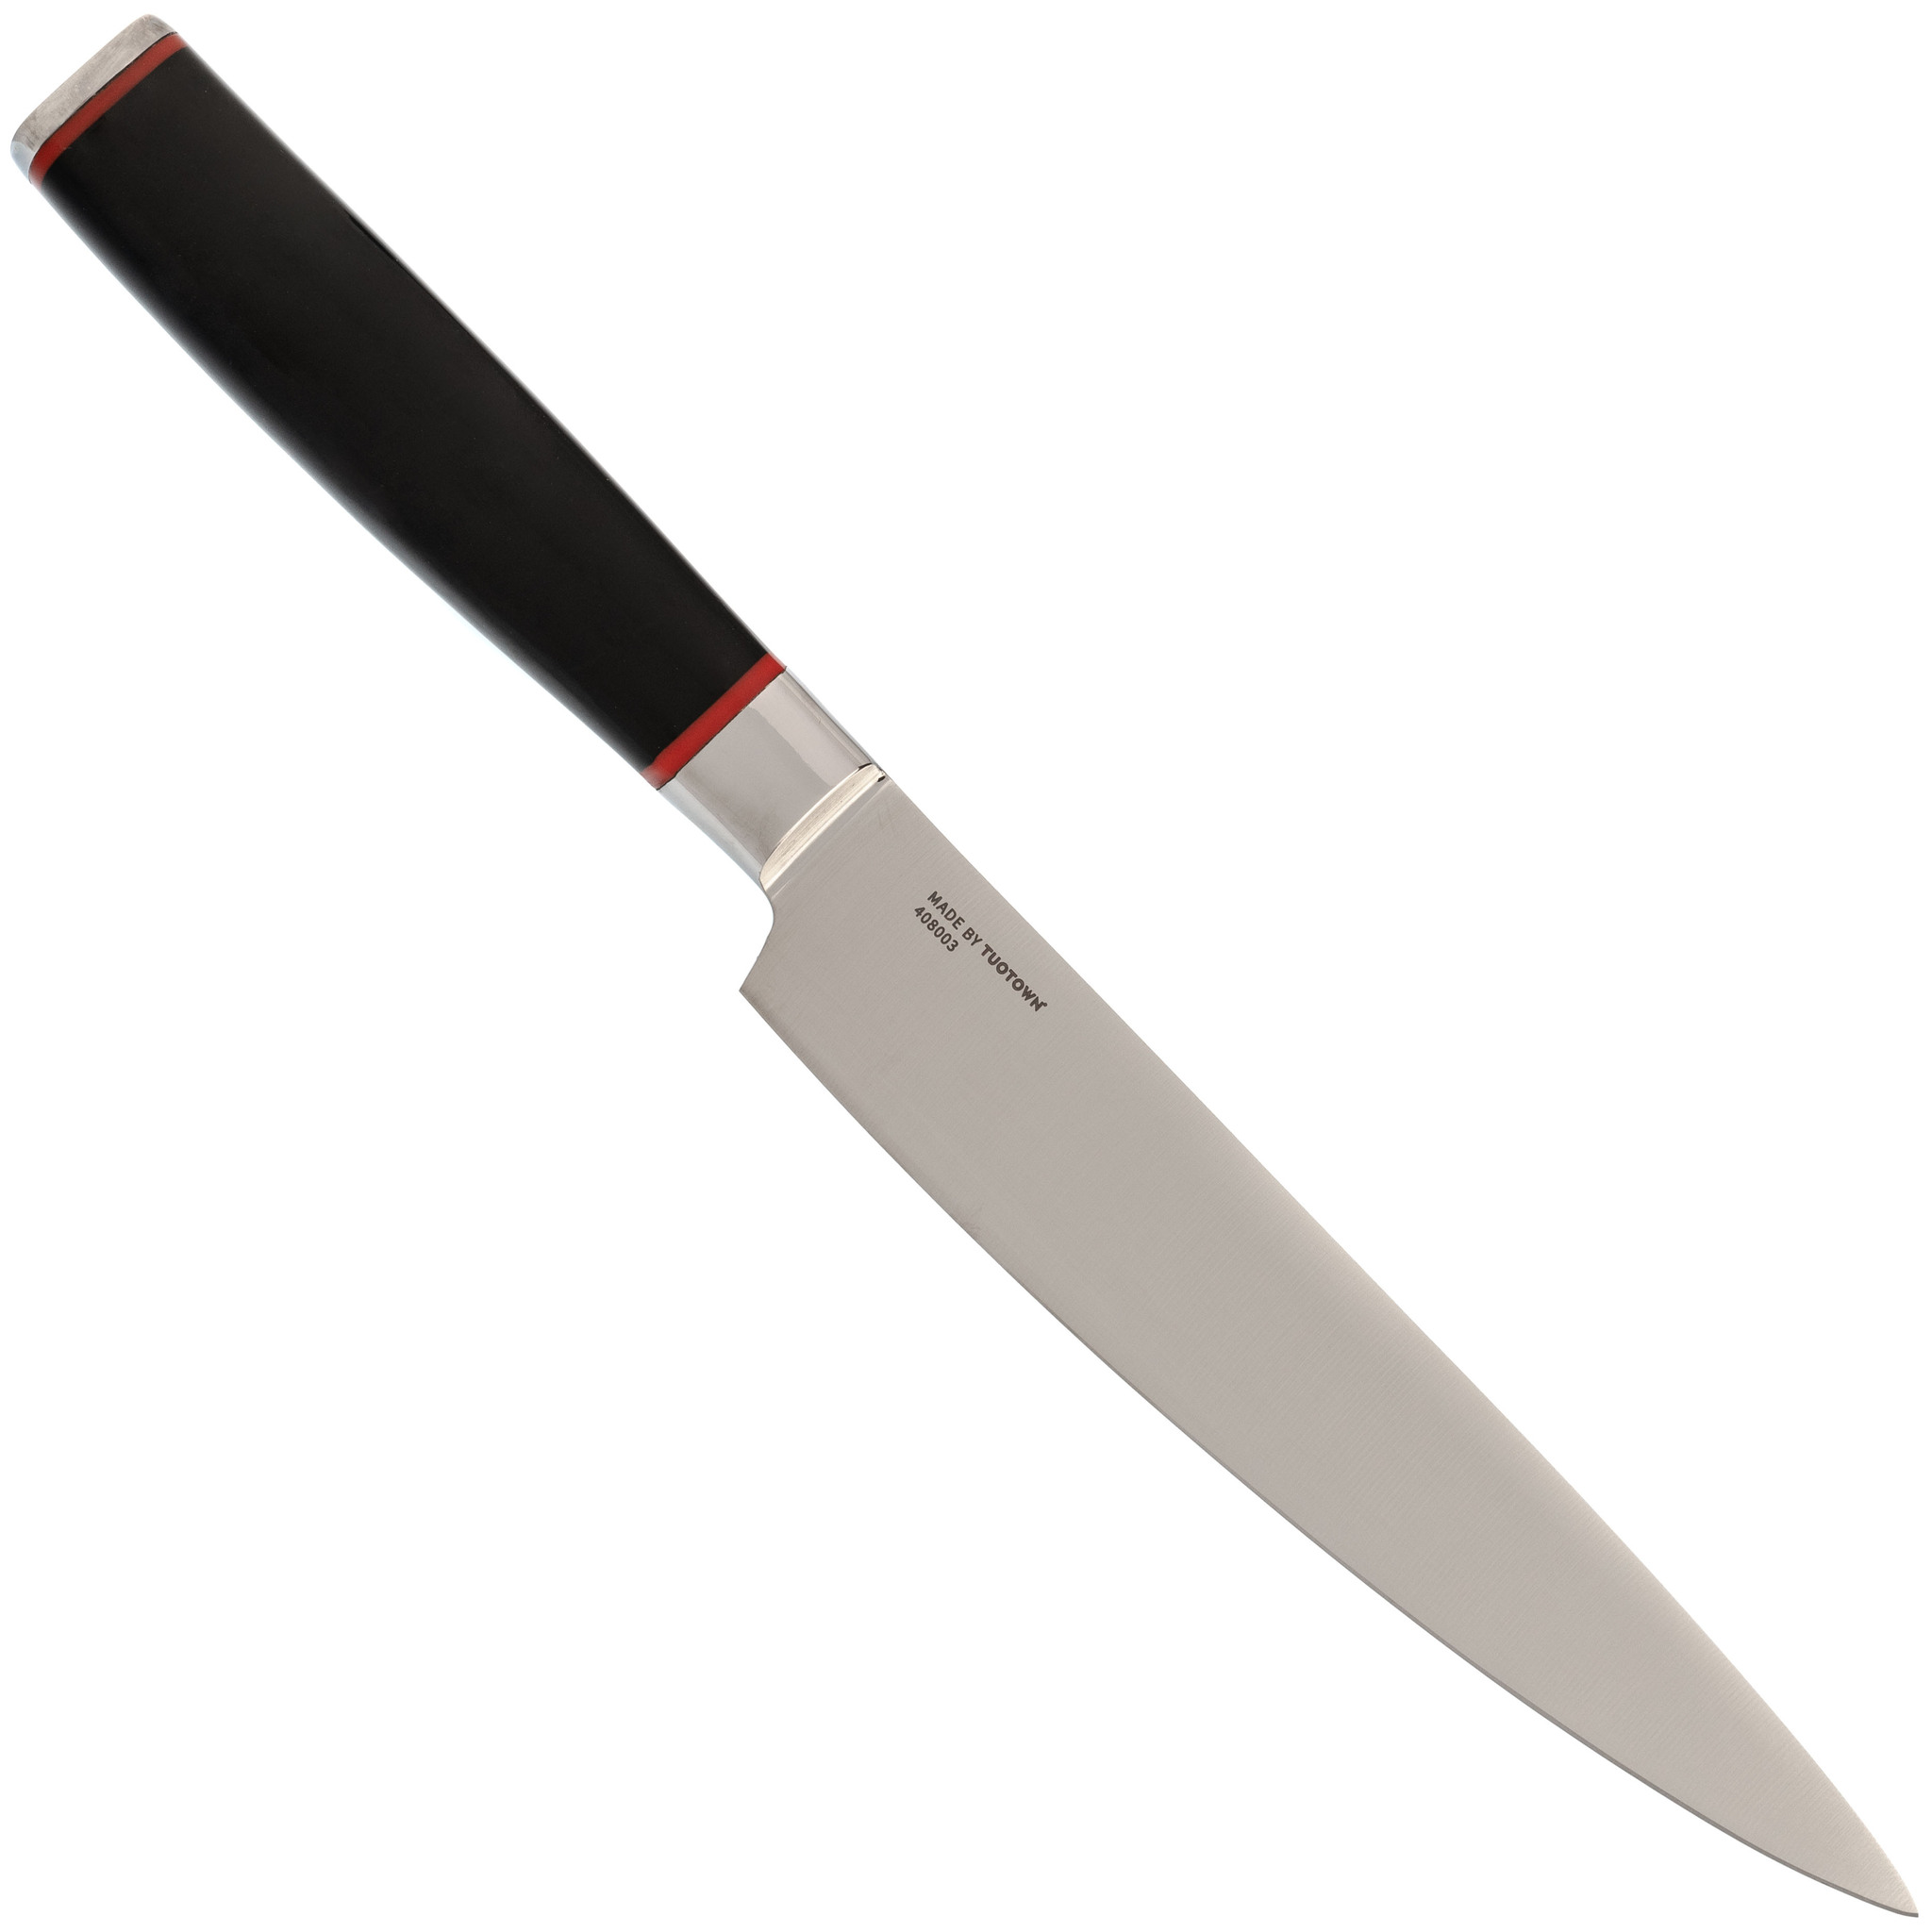 Кухонный нож для нарезки Tuotown, серия CONRAD, сталь 1.4116 - фото 3